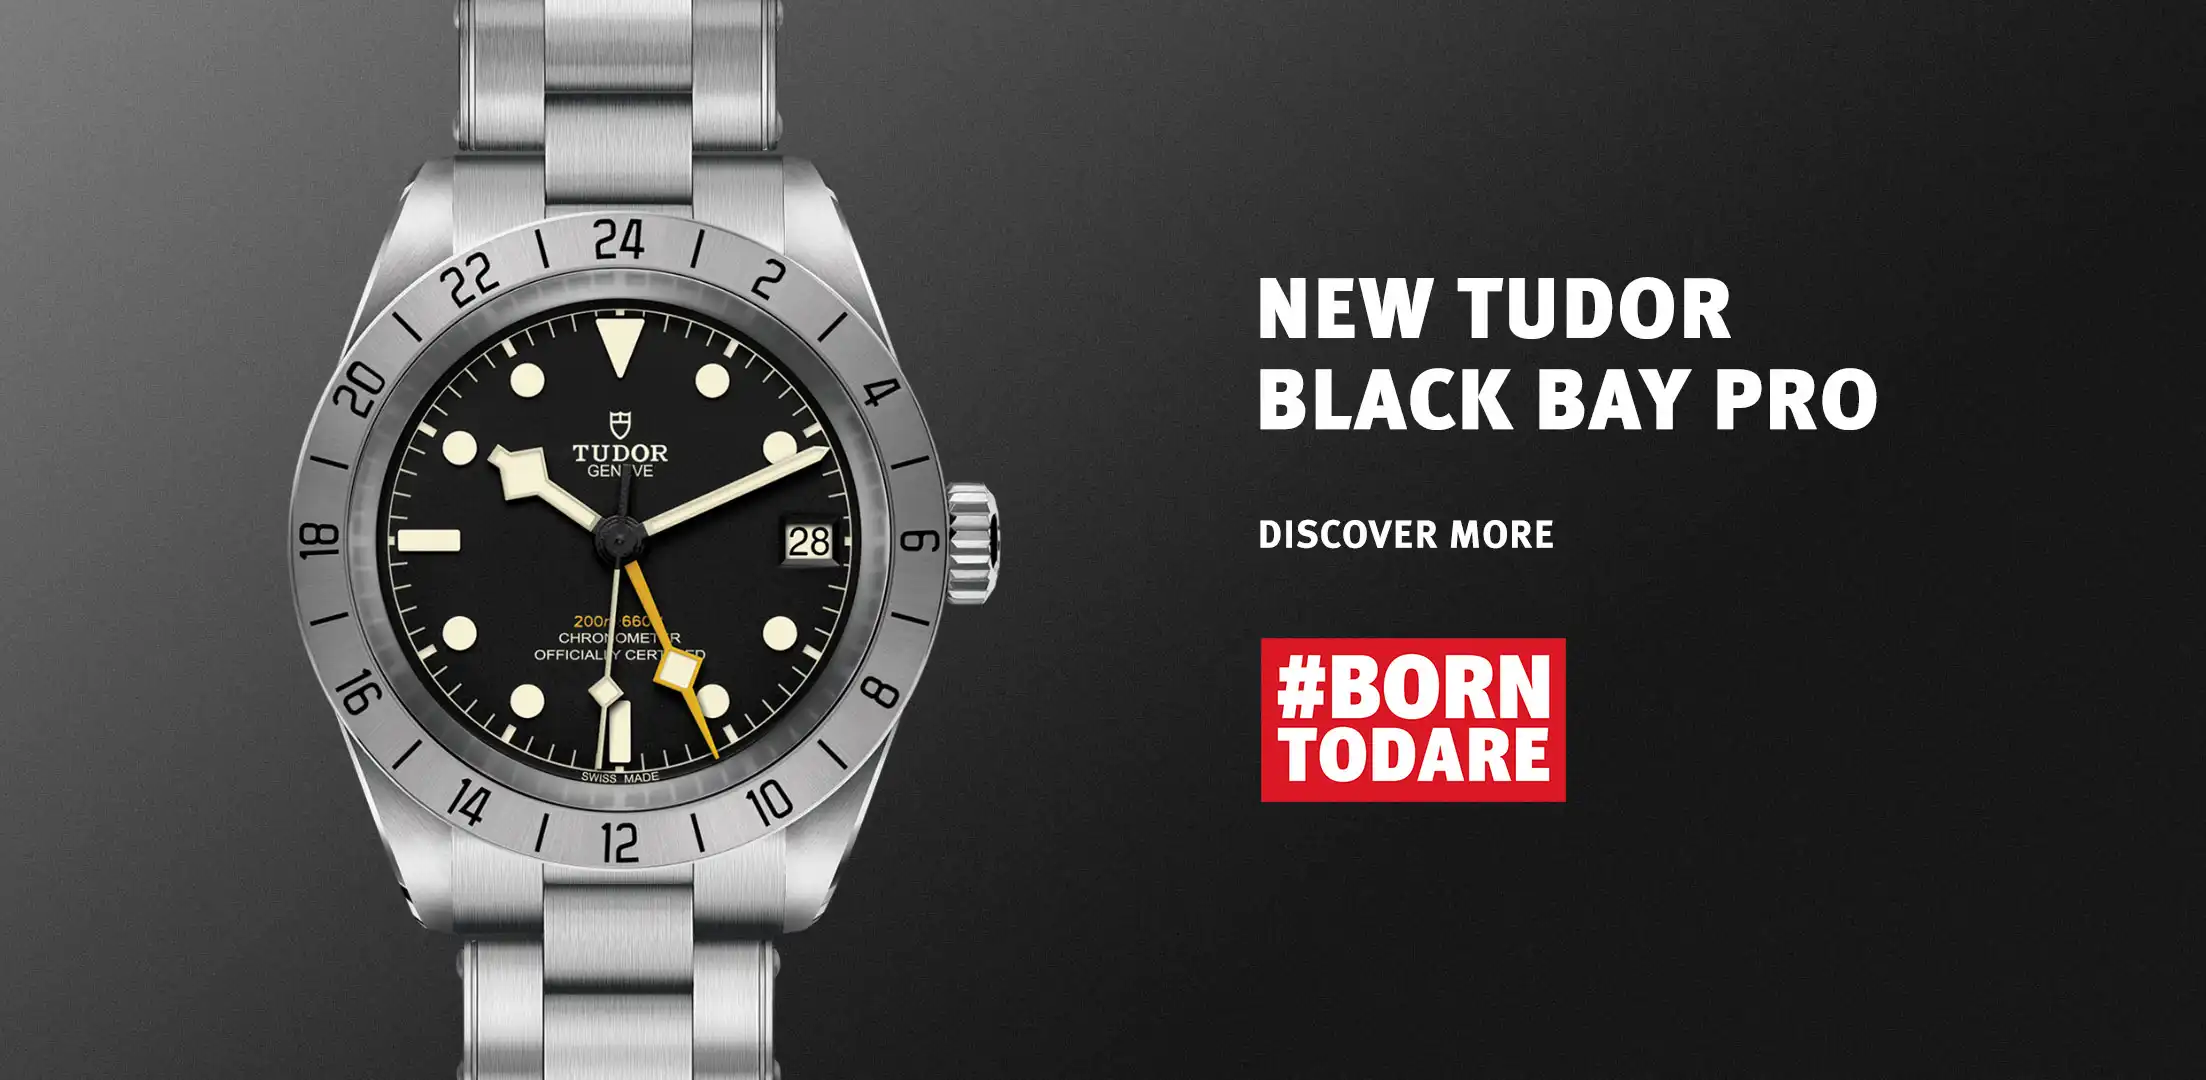 New Tudor Black Bay Pro